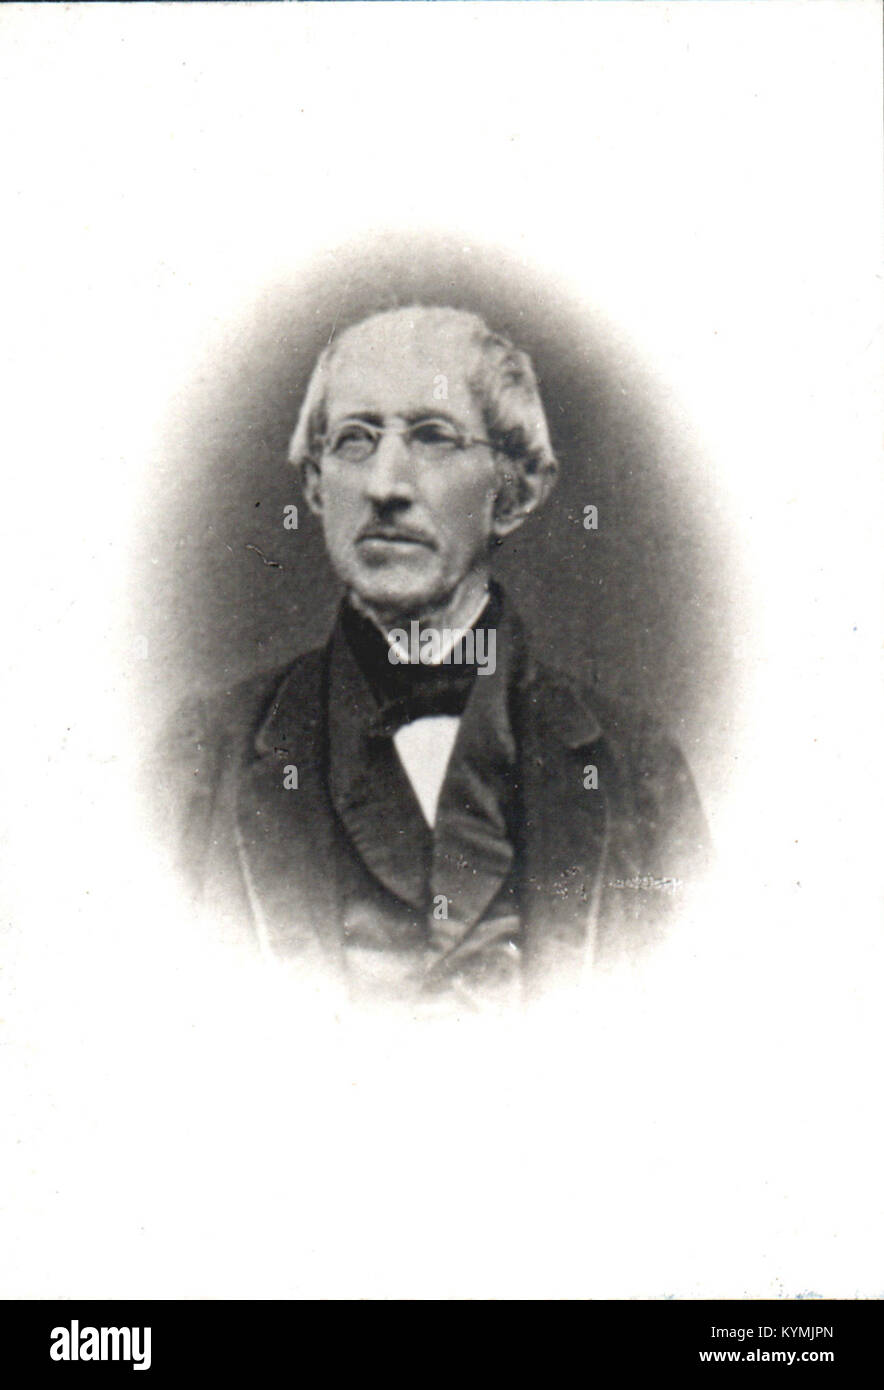 Portrait von zanino Volta (1795-1869), Physiker 2553640420 o Stockfoto